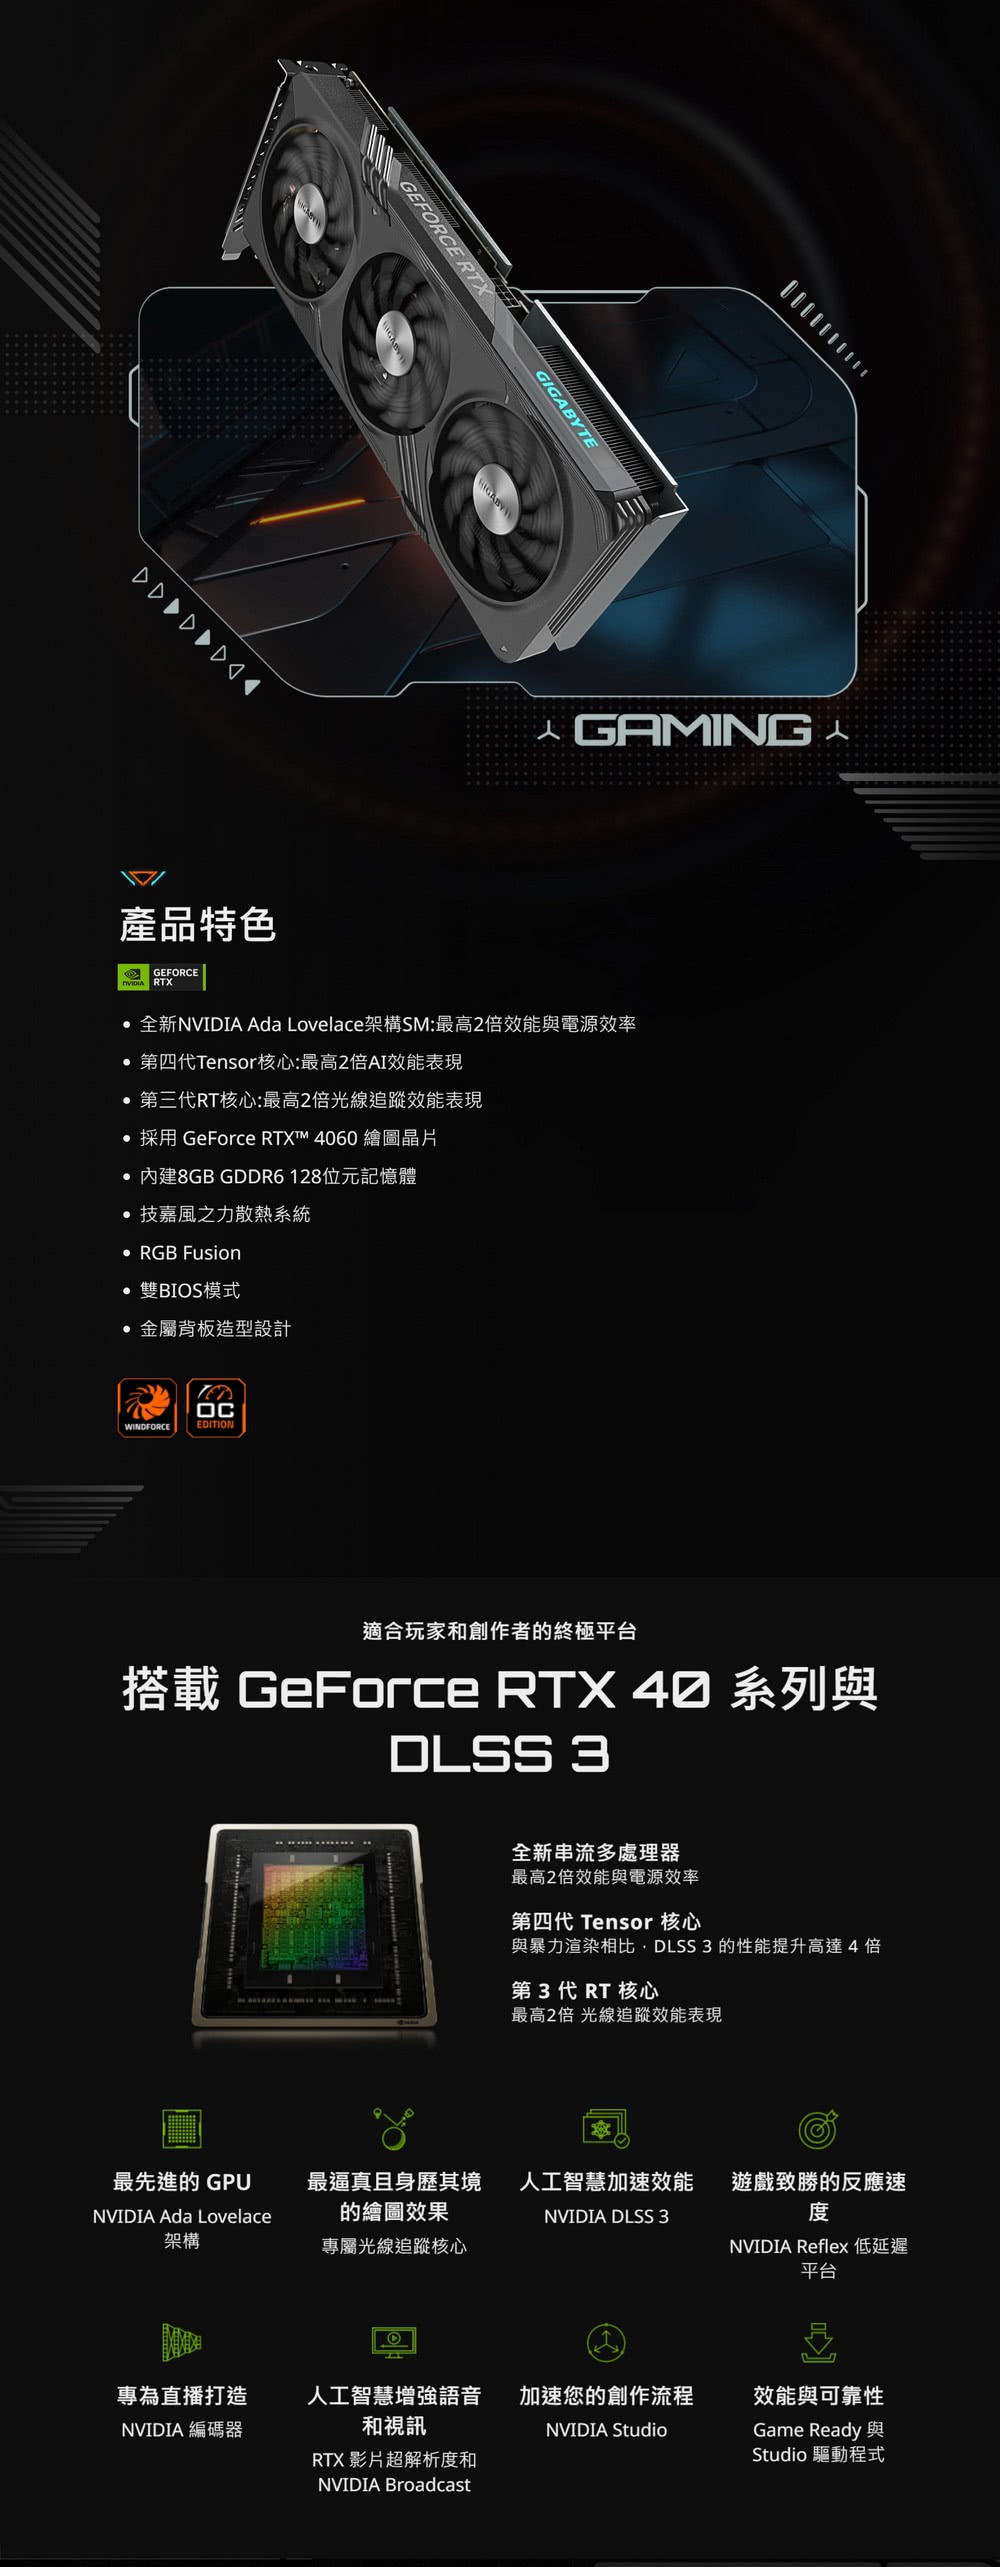 GIGABYTE 技嘉 750W組合★GeForce RTX